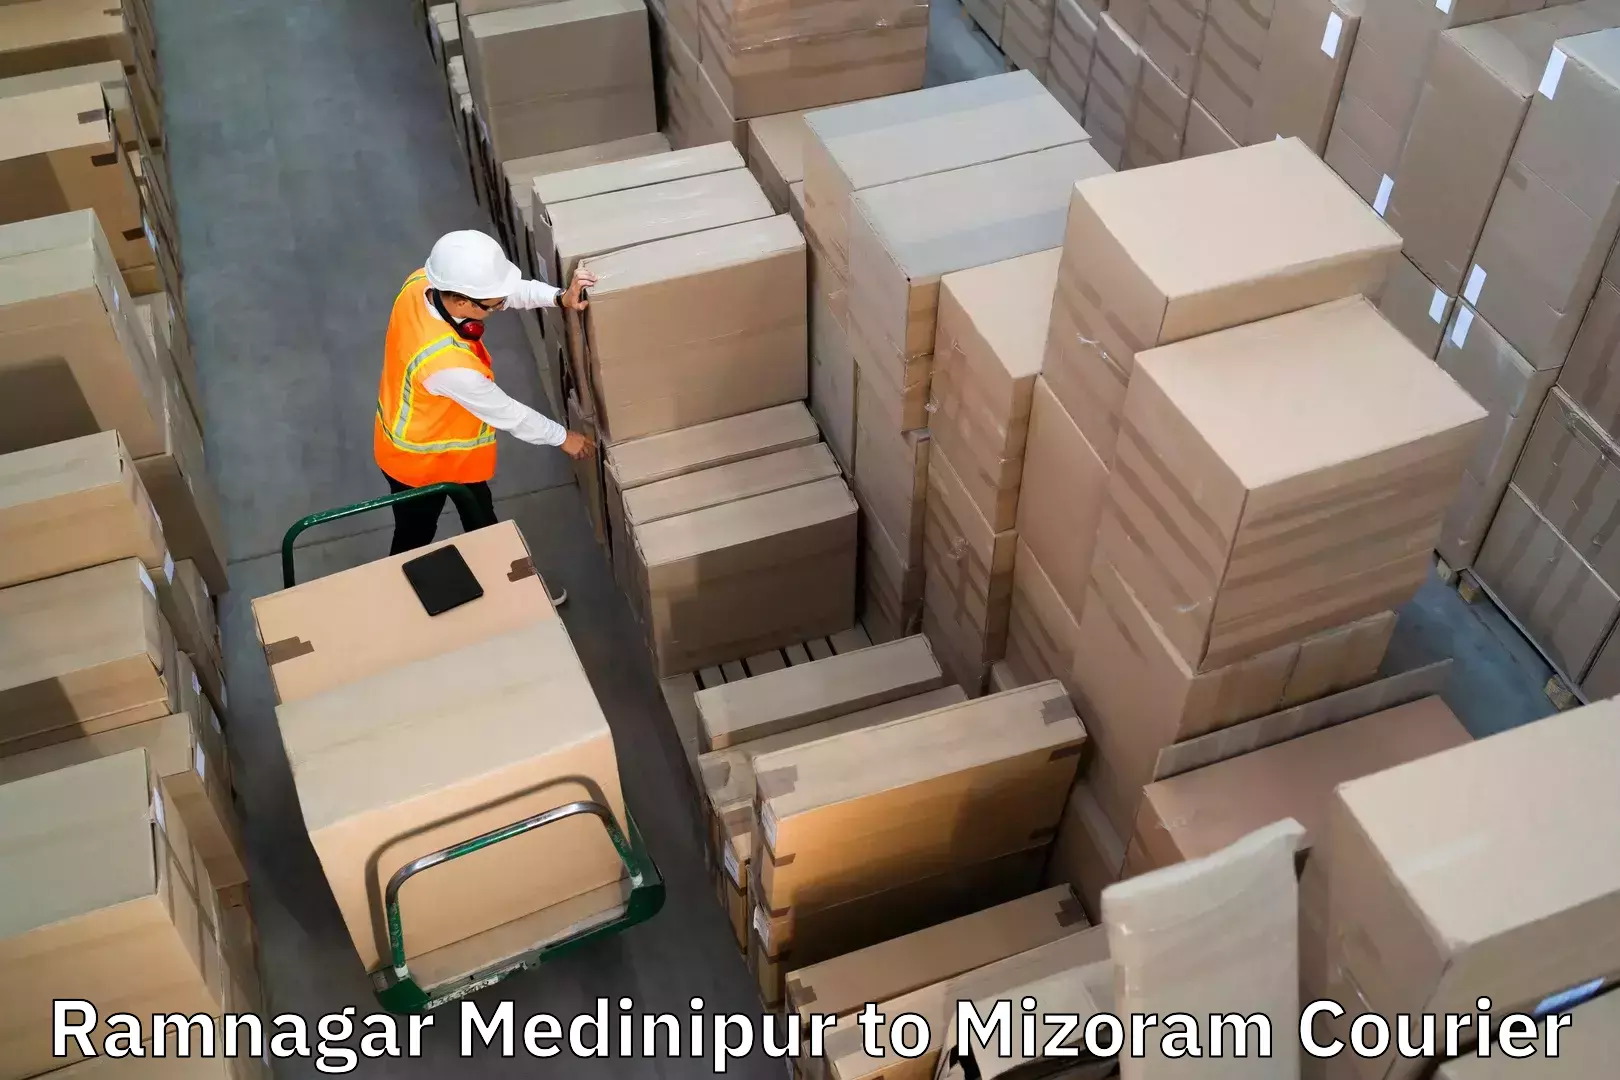 Luggage shipment tracking Ramnagar Medinipur to Lawngtlai